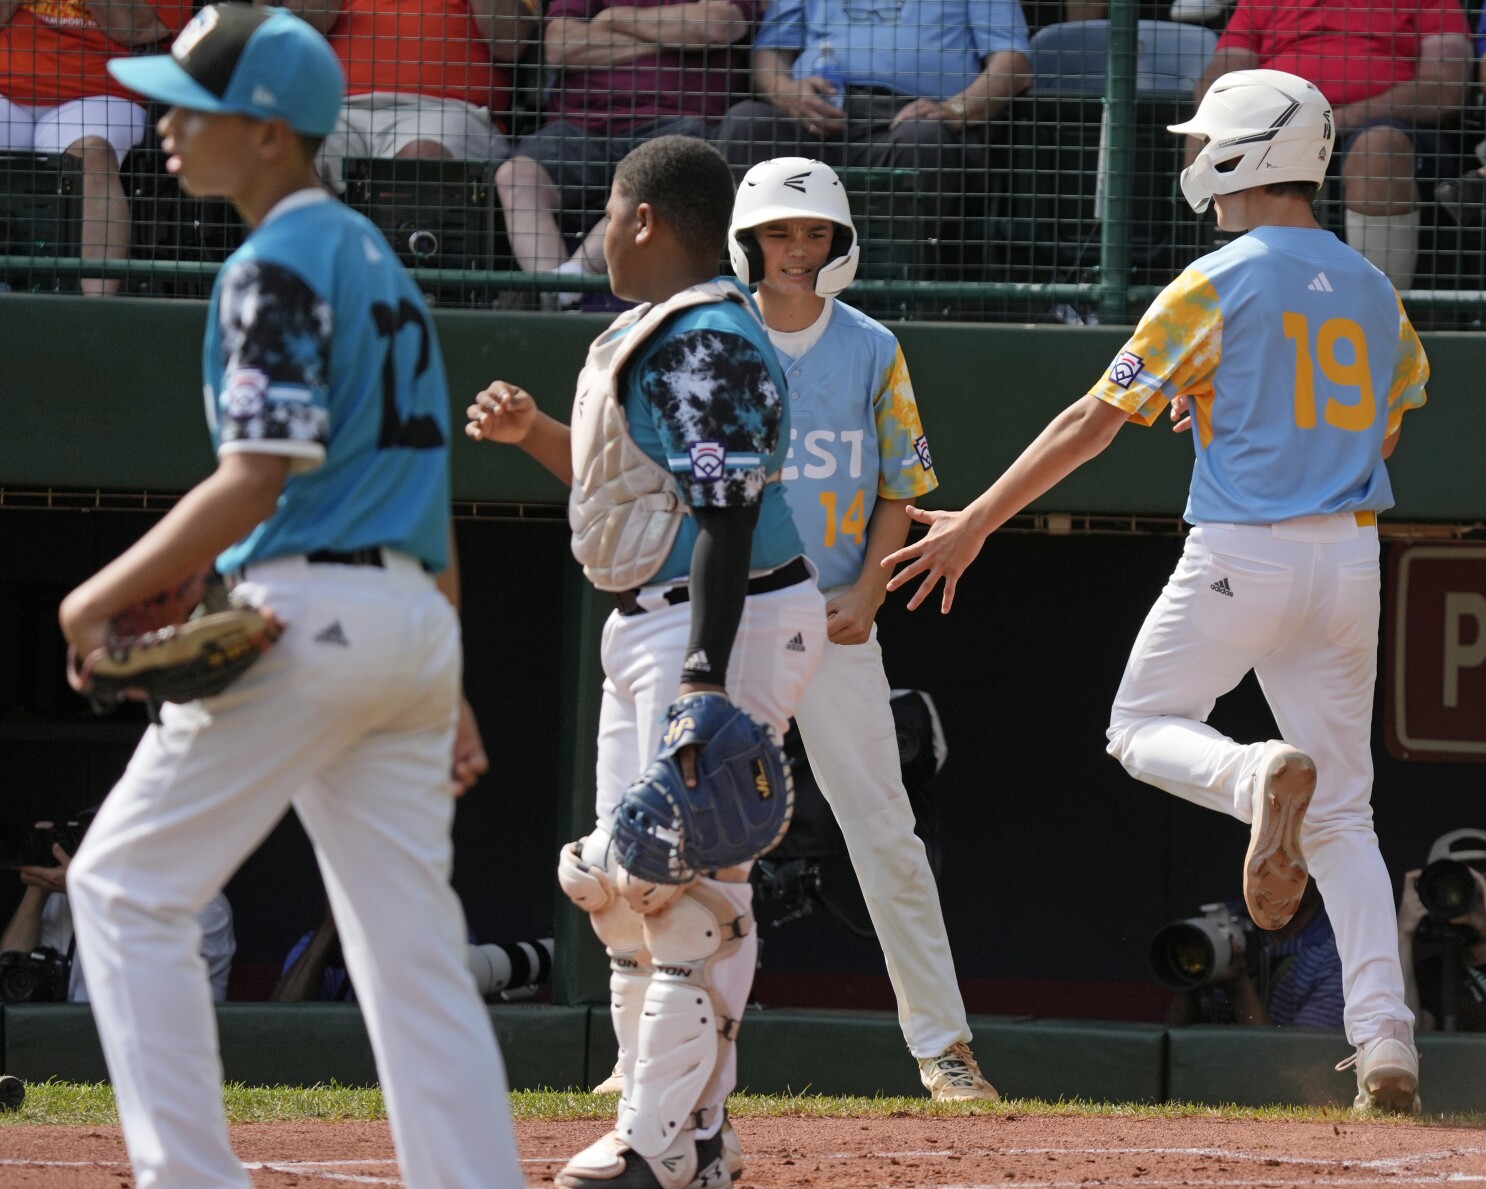 Baseball: Minor league team wins despite no hits or walks